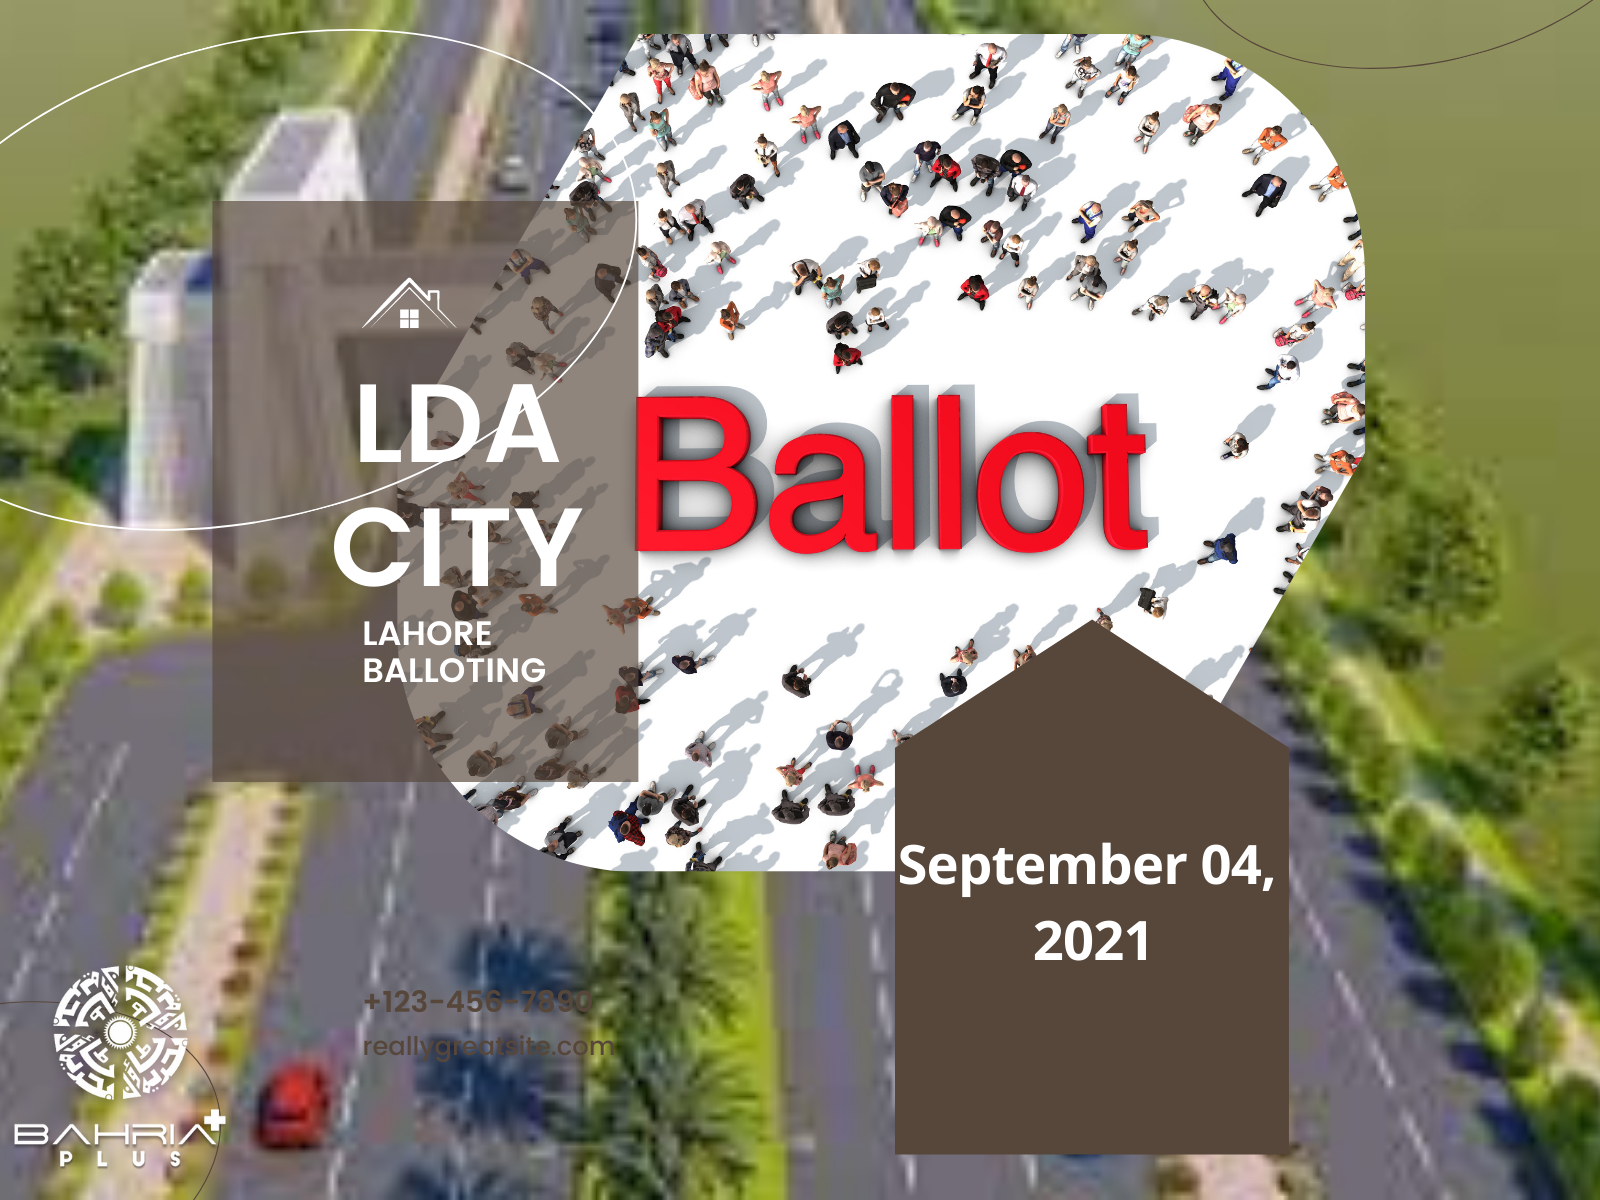 LDA announced 3rd Balloting for LDA City filer holders.